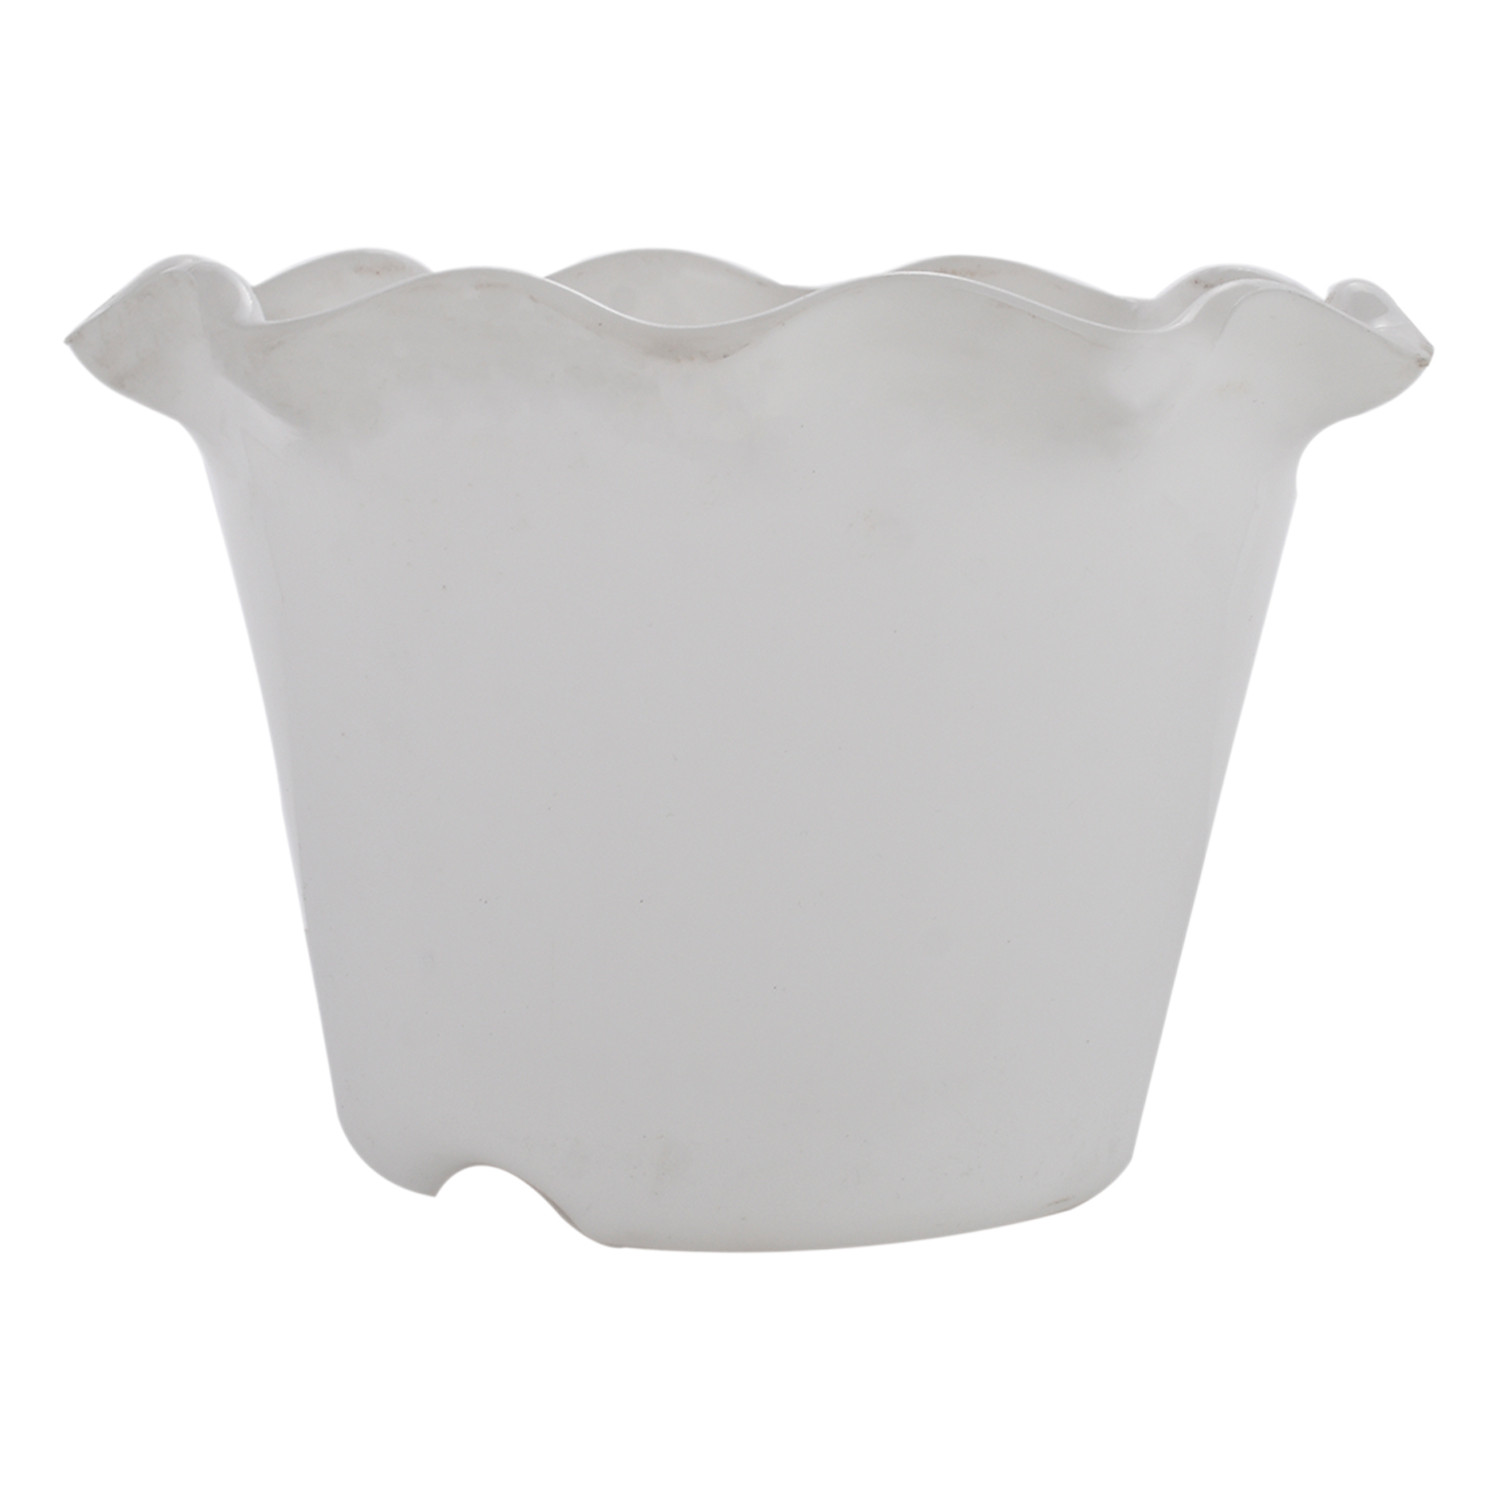 Kuber Industries Blossom Flower Pot|Durable Plastic Flower Pot|Gamla With Drain Holes for Home Décor|Balcony|Garden|8 Inch|Pack of 2 (White & Orange)